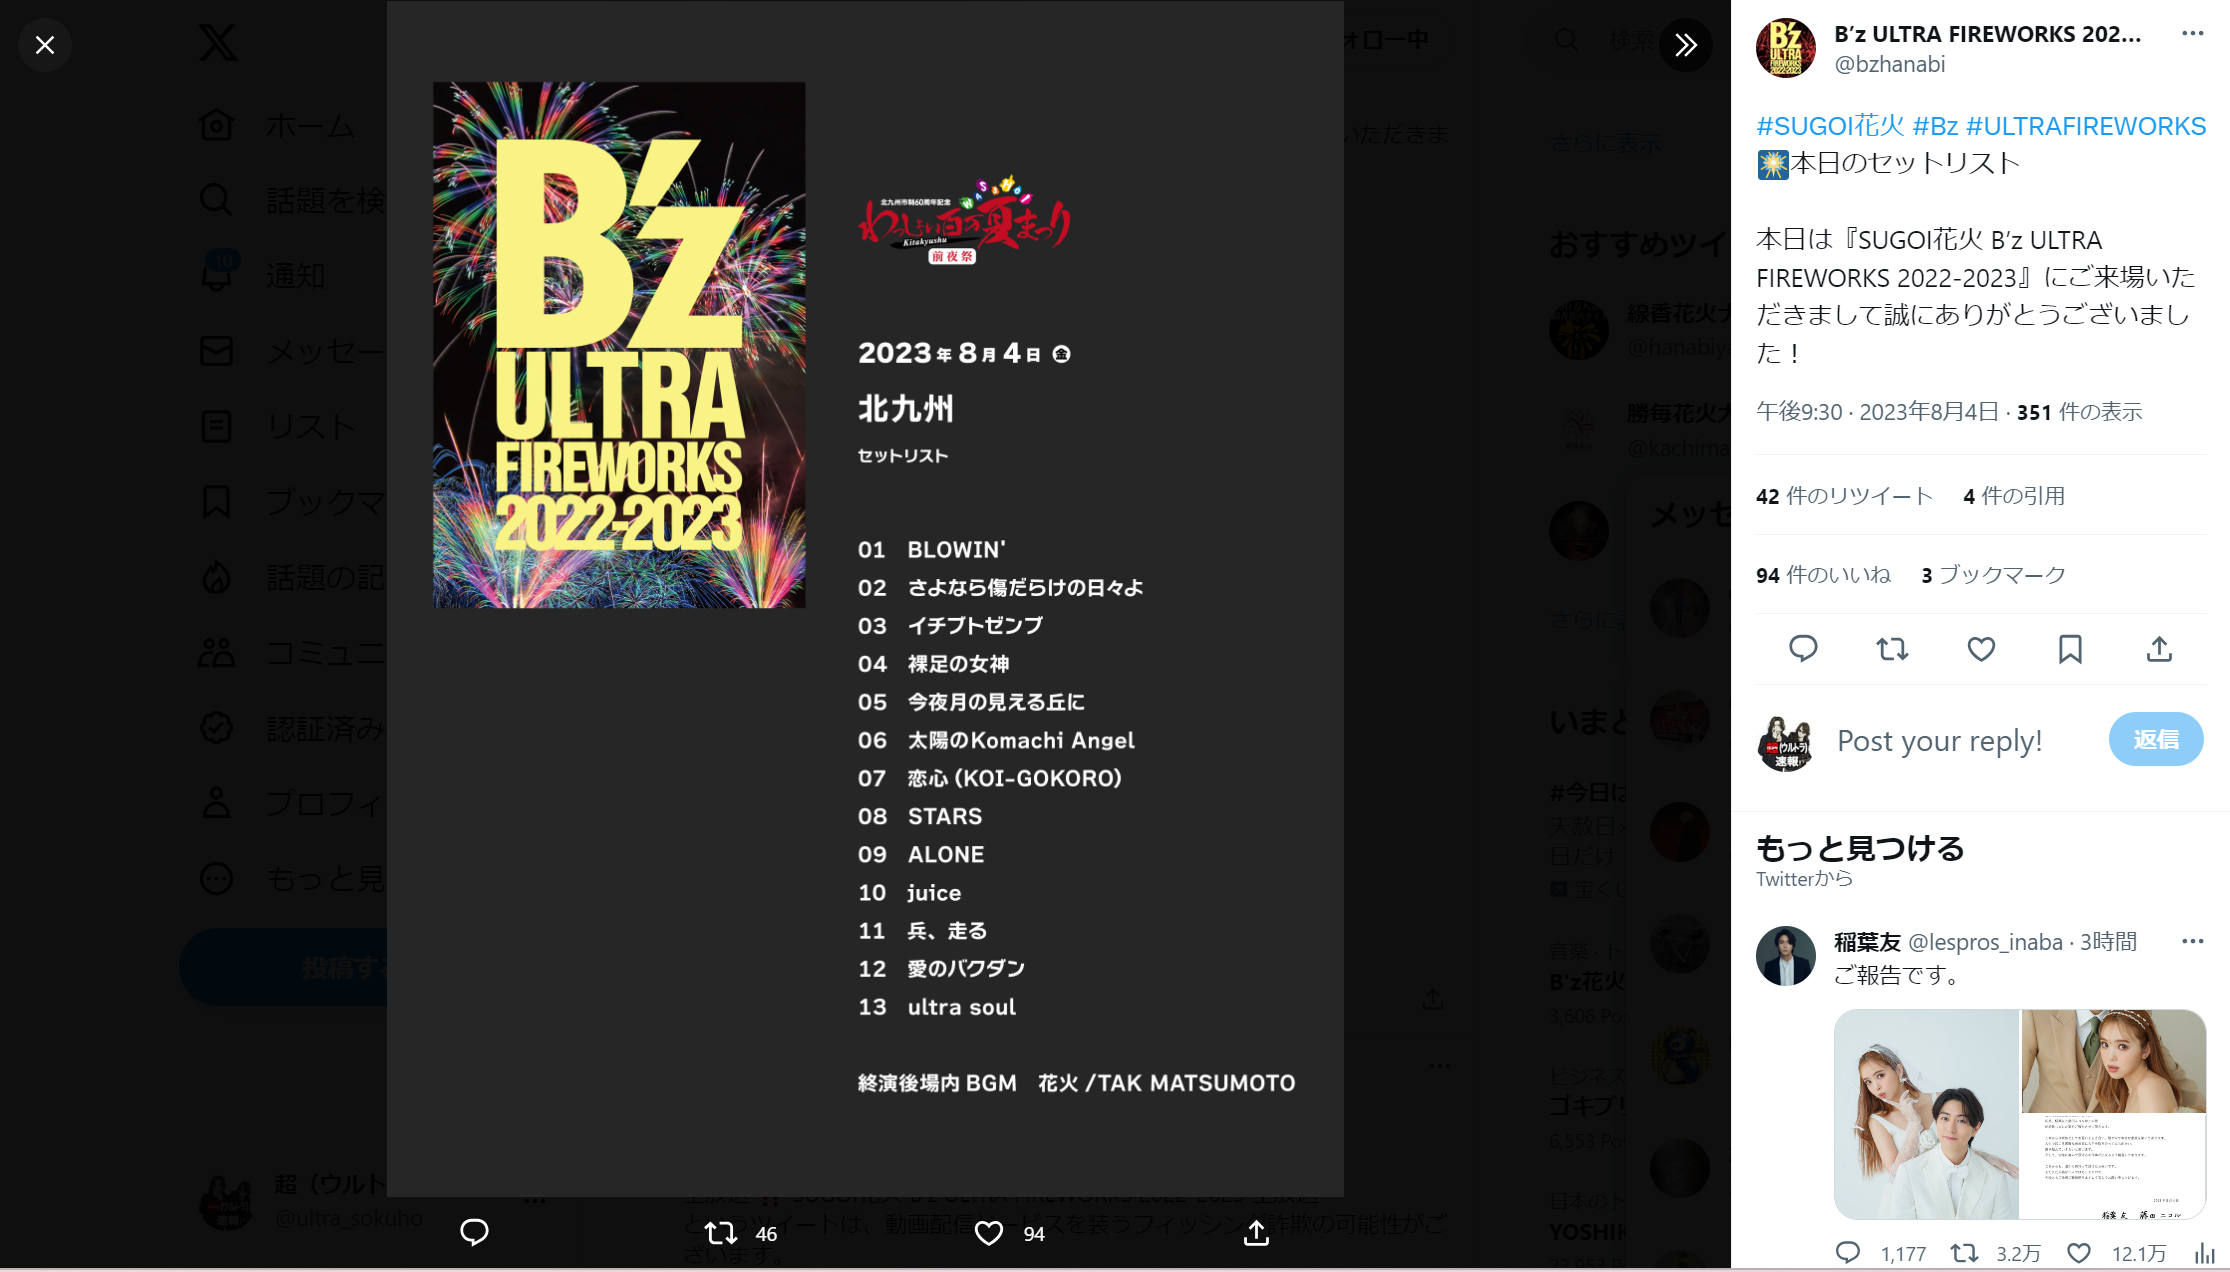 SUGOI花火『B’z ULTRA FIREWORKS 2022-2023』北九州公演のセットリストの画像